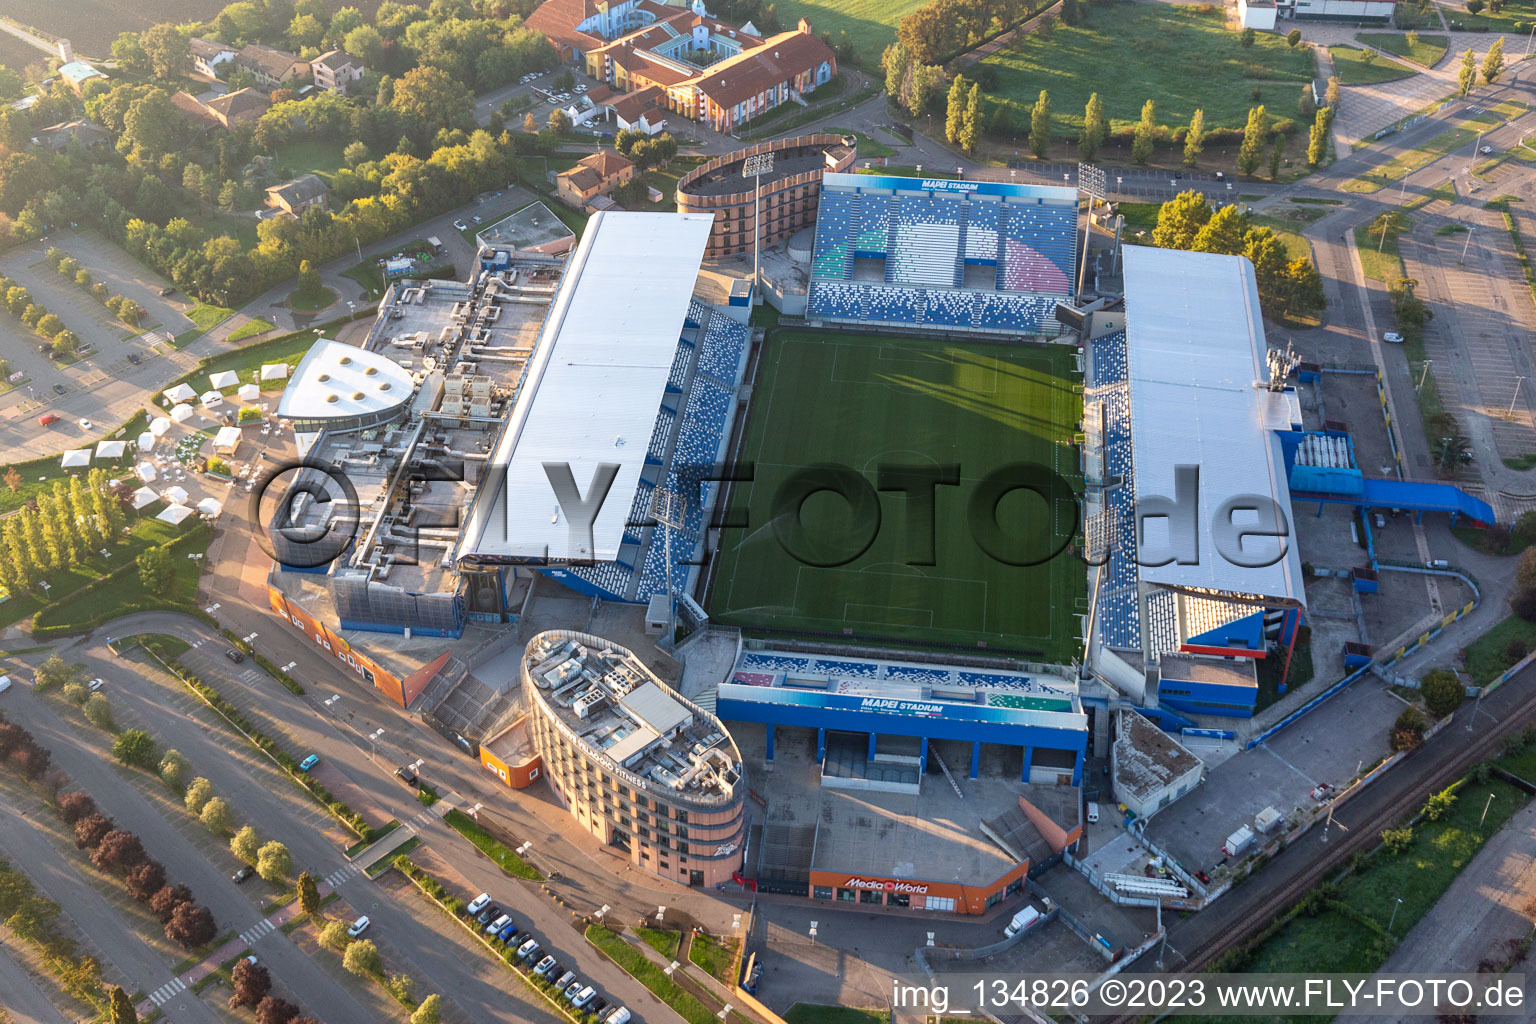 Luftbild von MAPEI Stadium – Città del Tricolore in Reggio nell’Emilia im Bundesland Reggio Emilia, Italien